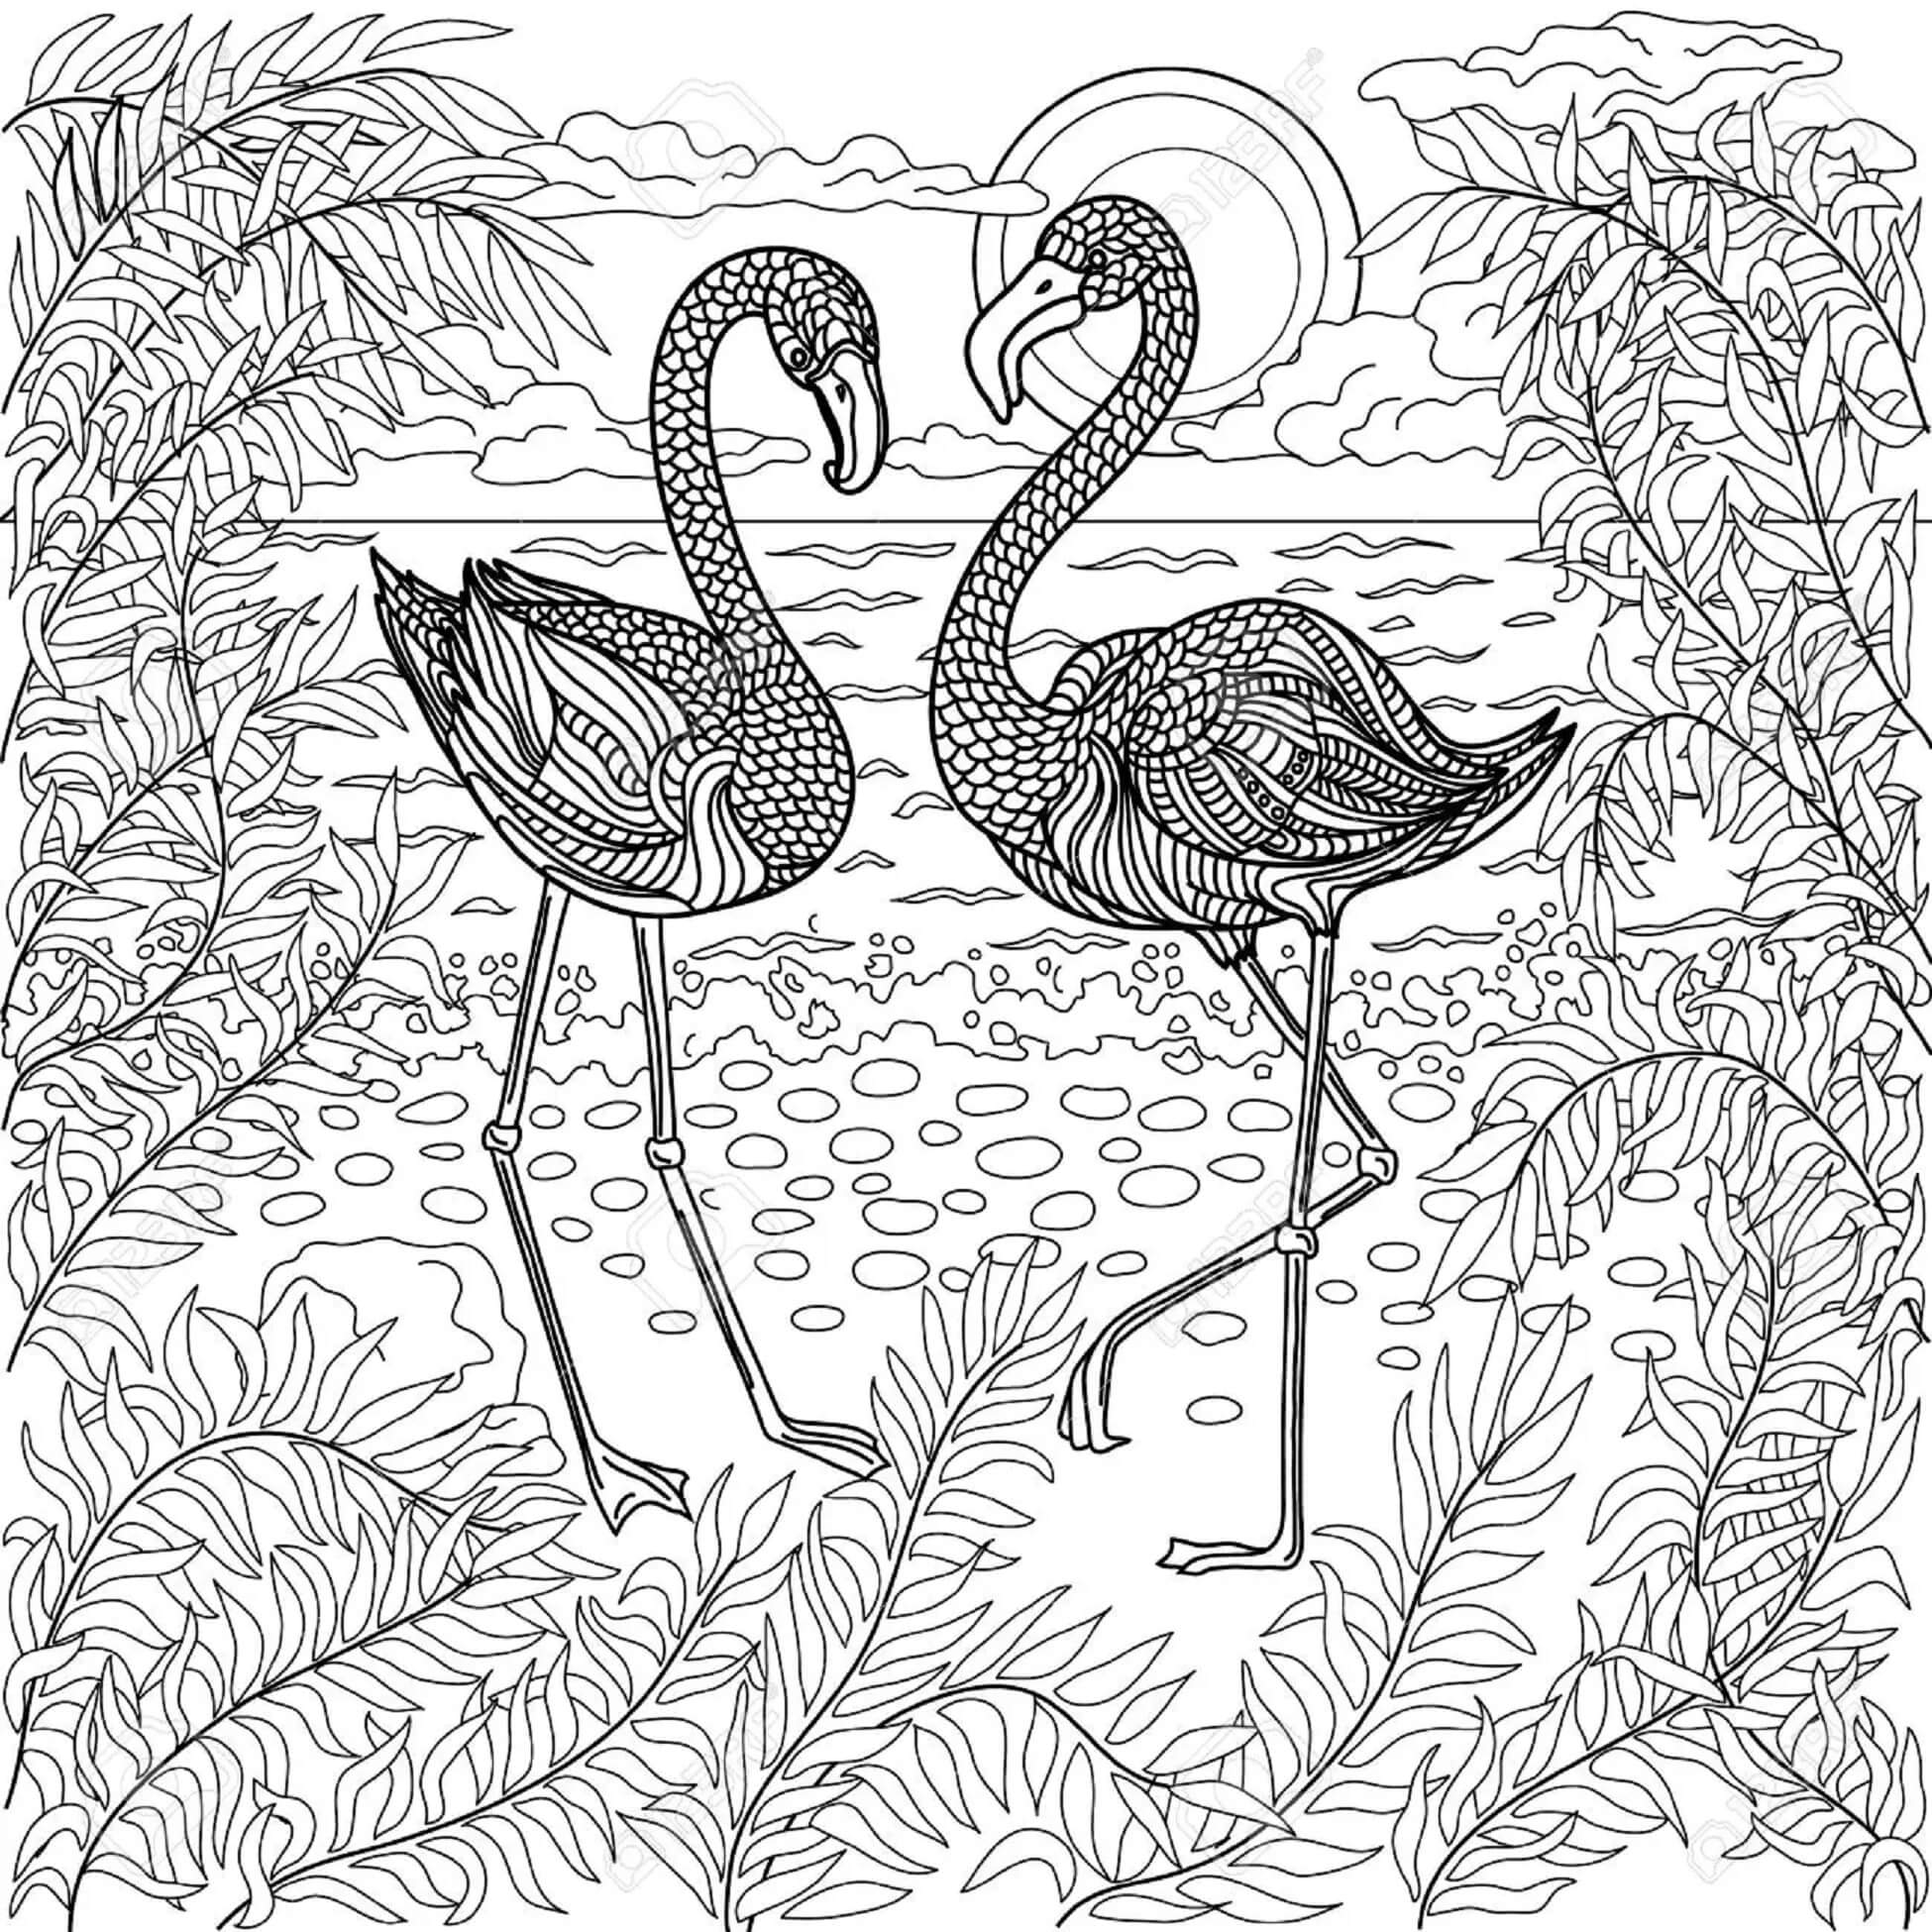 Mandala Two Flamingos On The Beach Coloring Page Mandalas